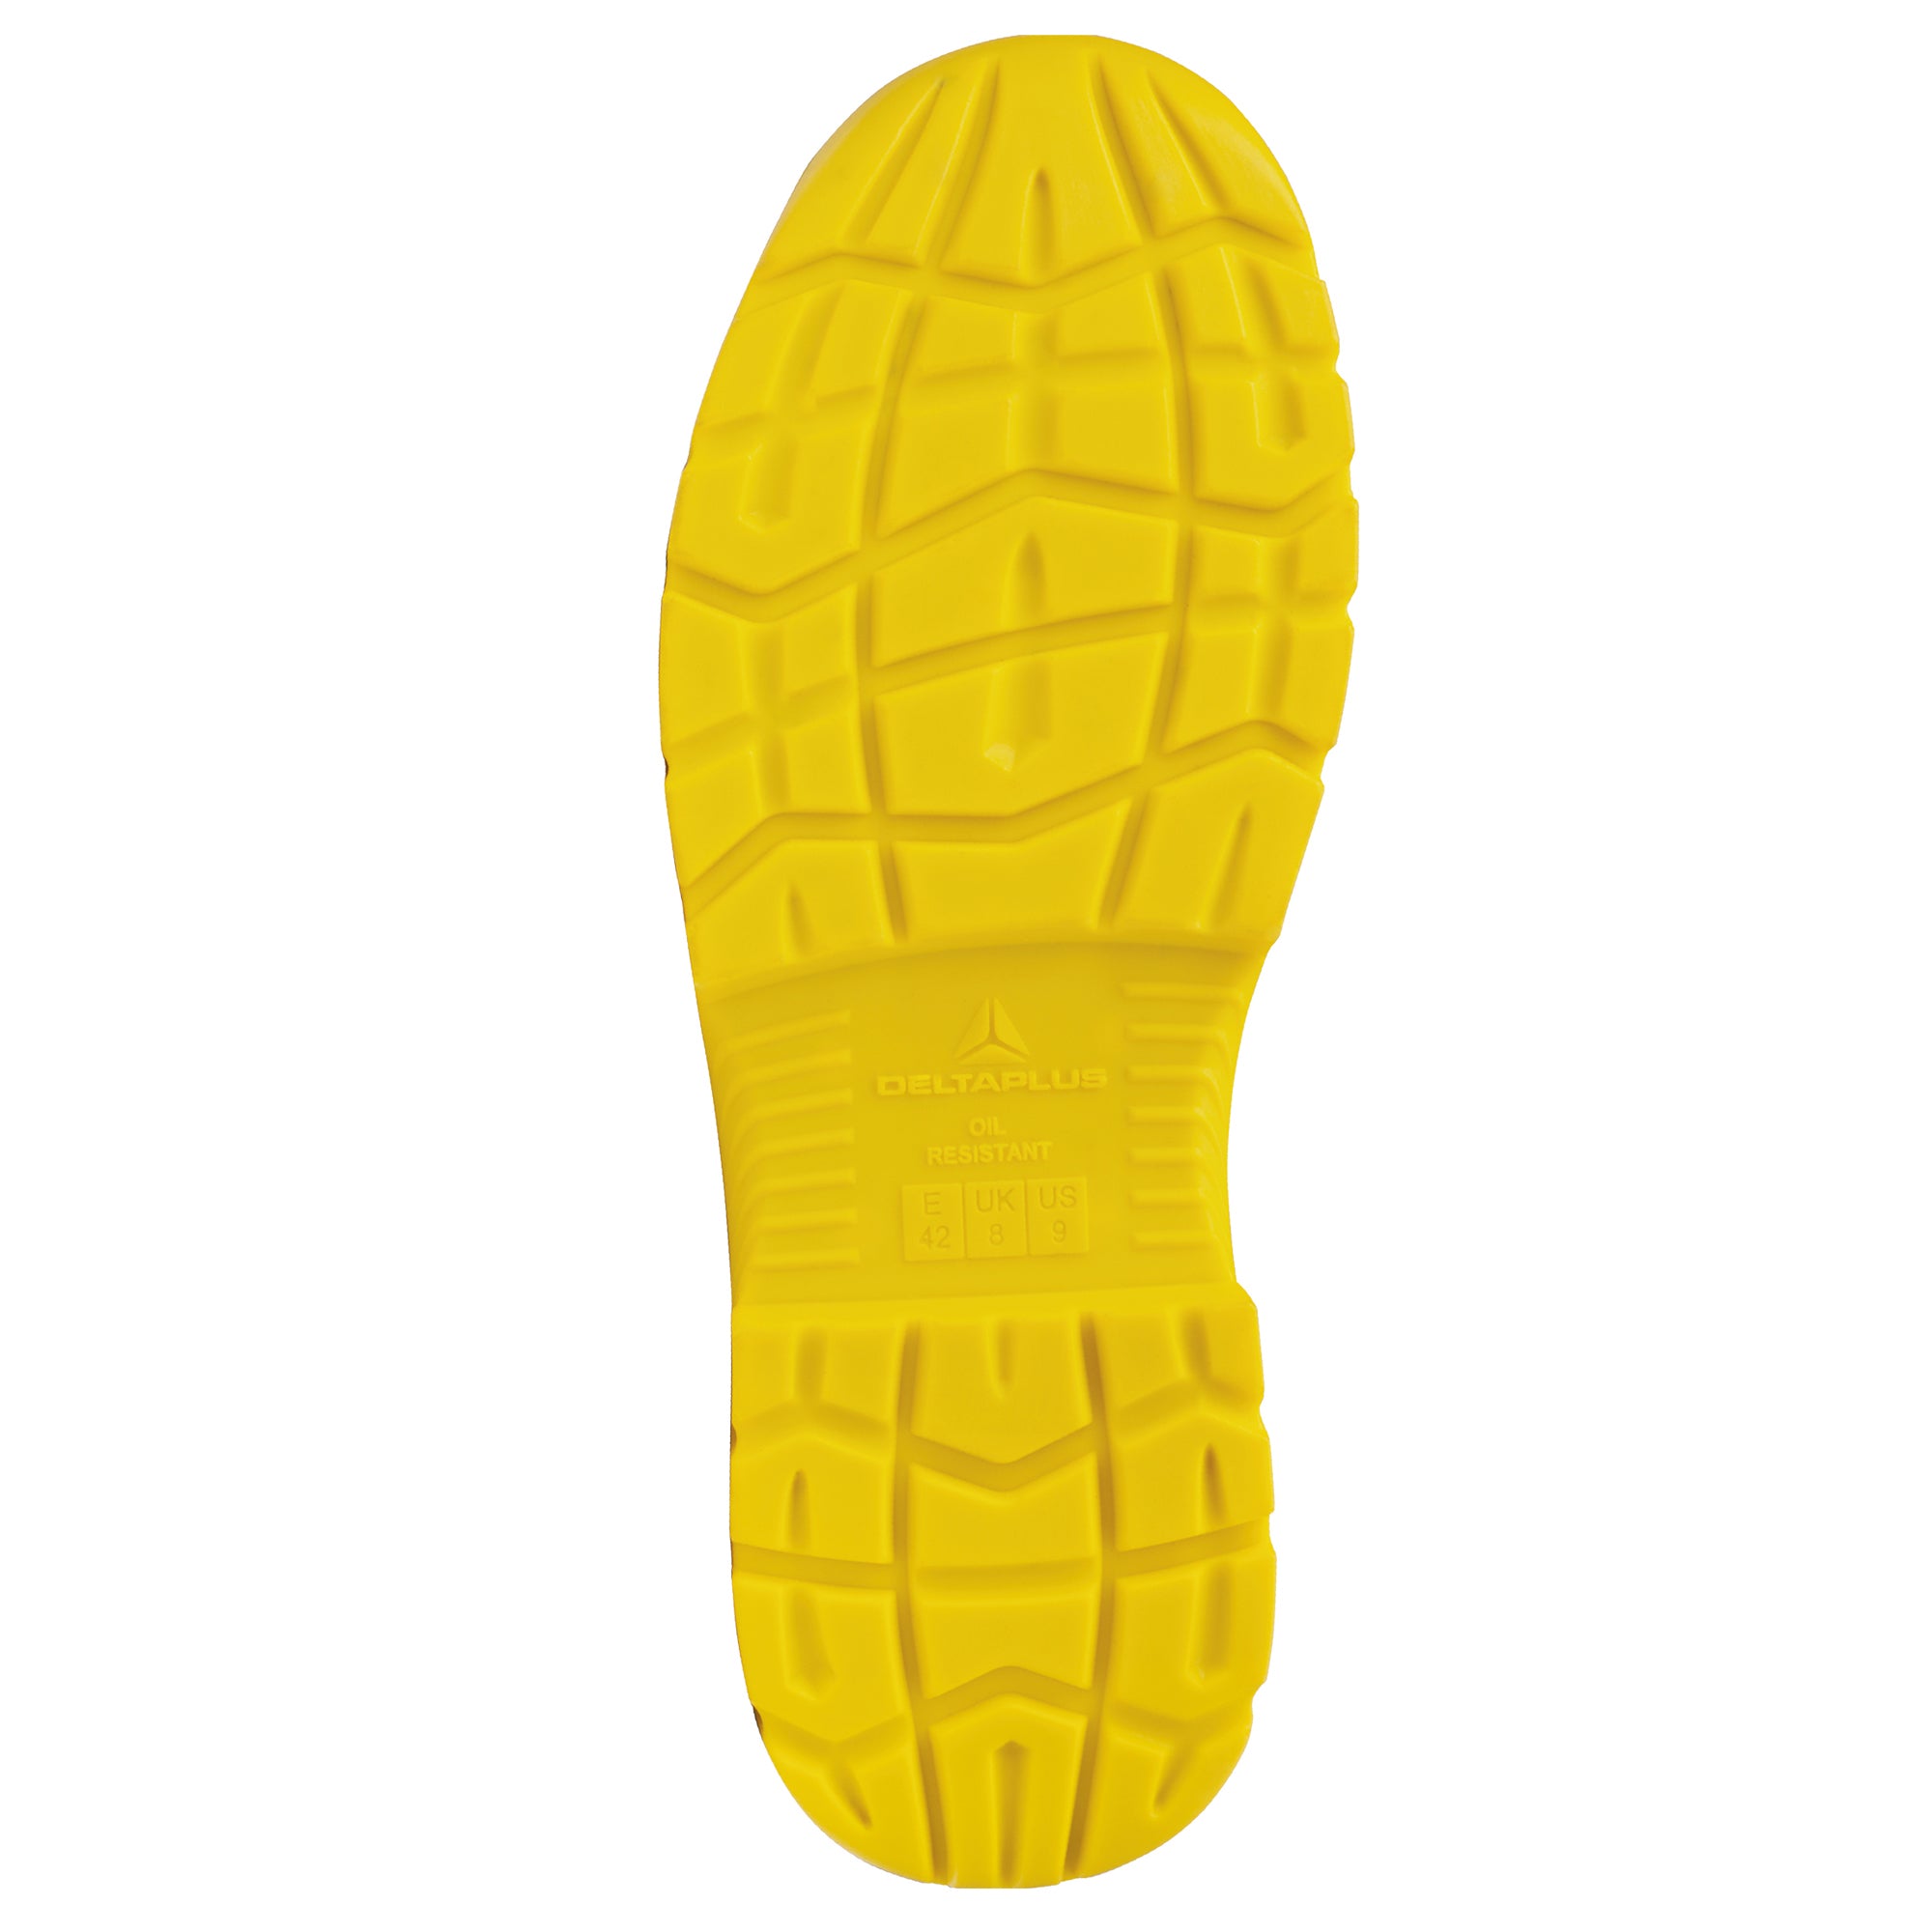 deltaplus-calzatura-sicurezza-rimini-4-s1p-src-n-44-beige-giallo